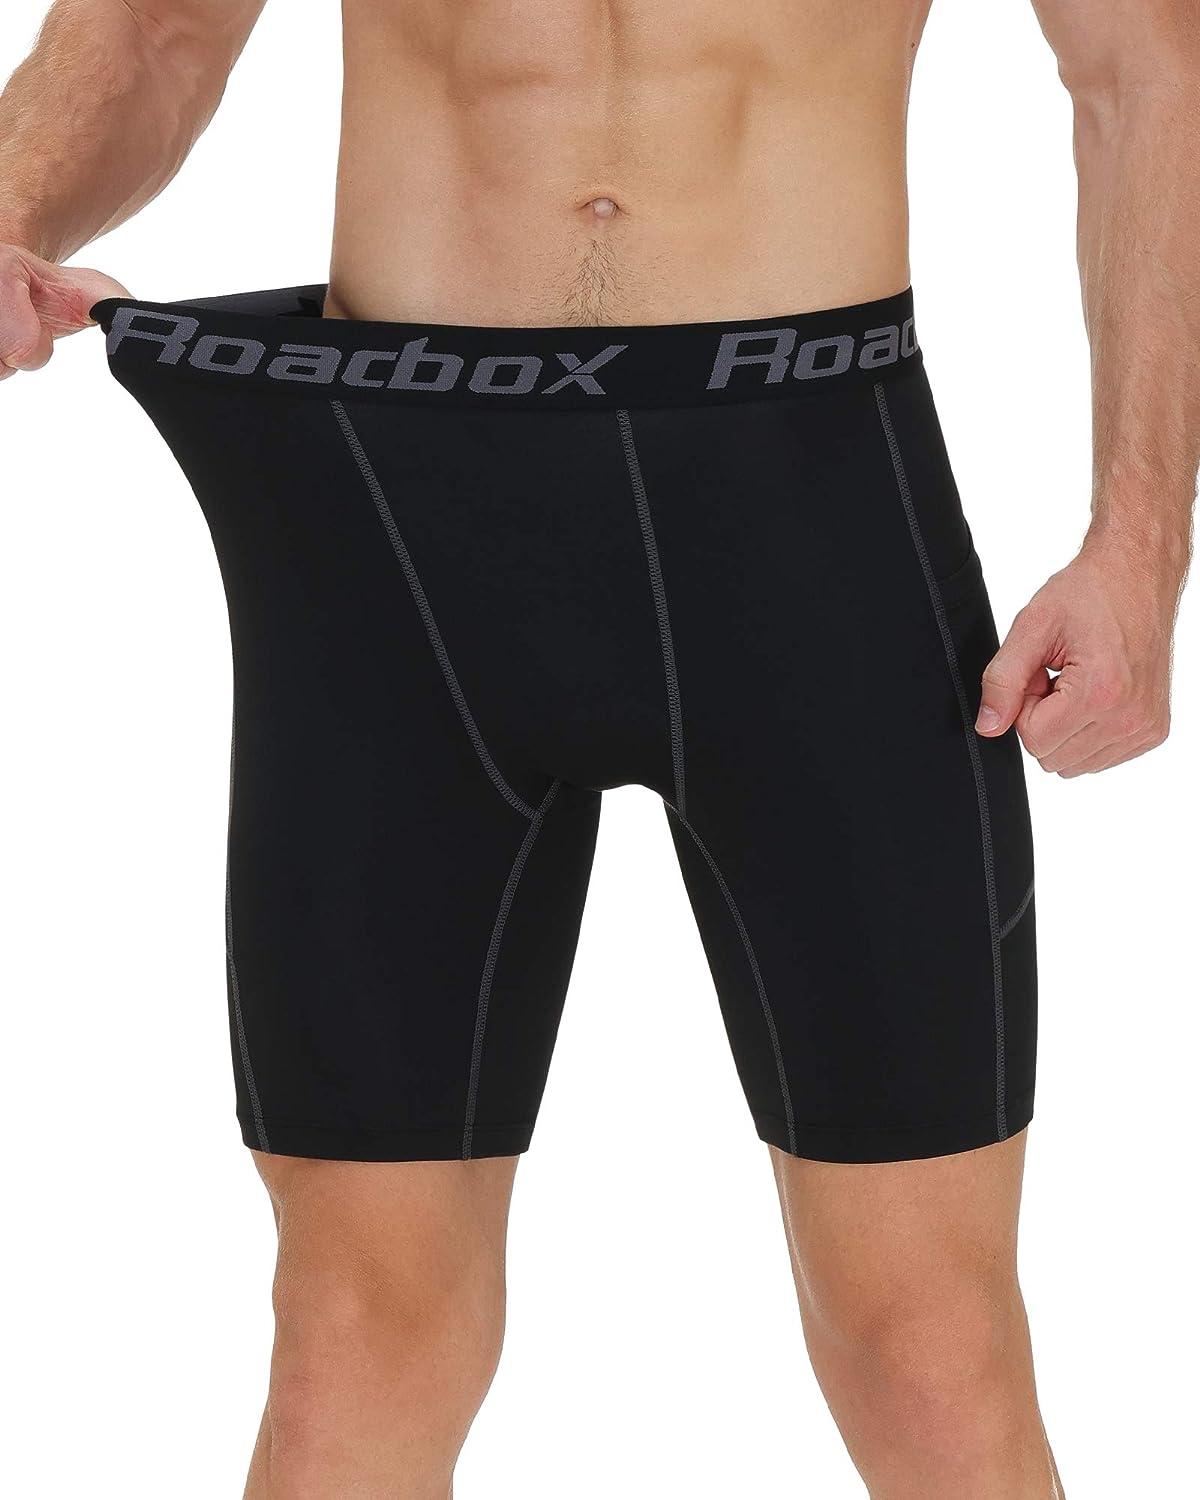 Roadbox Compression Shorts for Men, Athletic Running Spandex